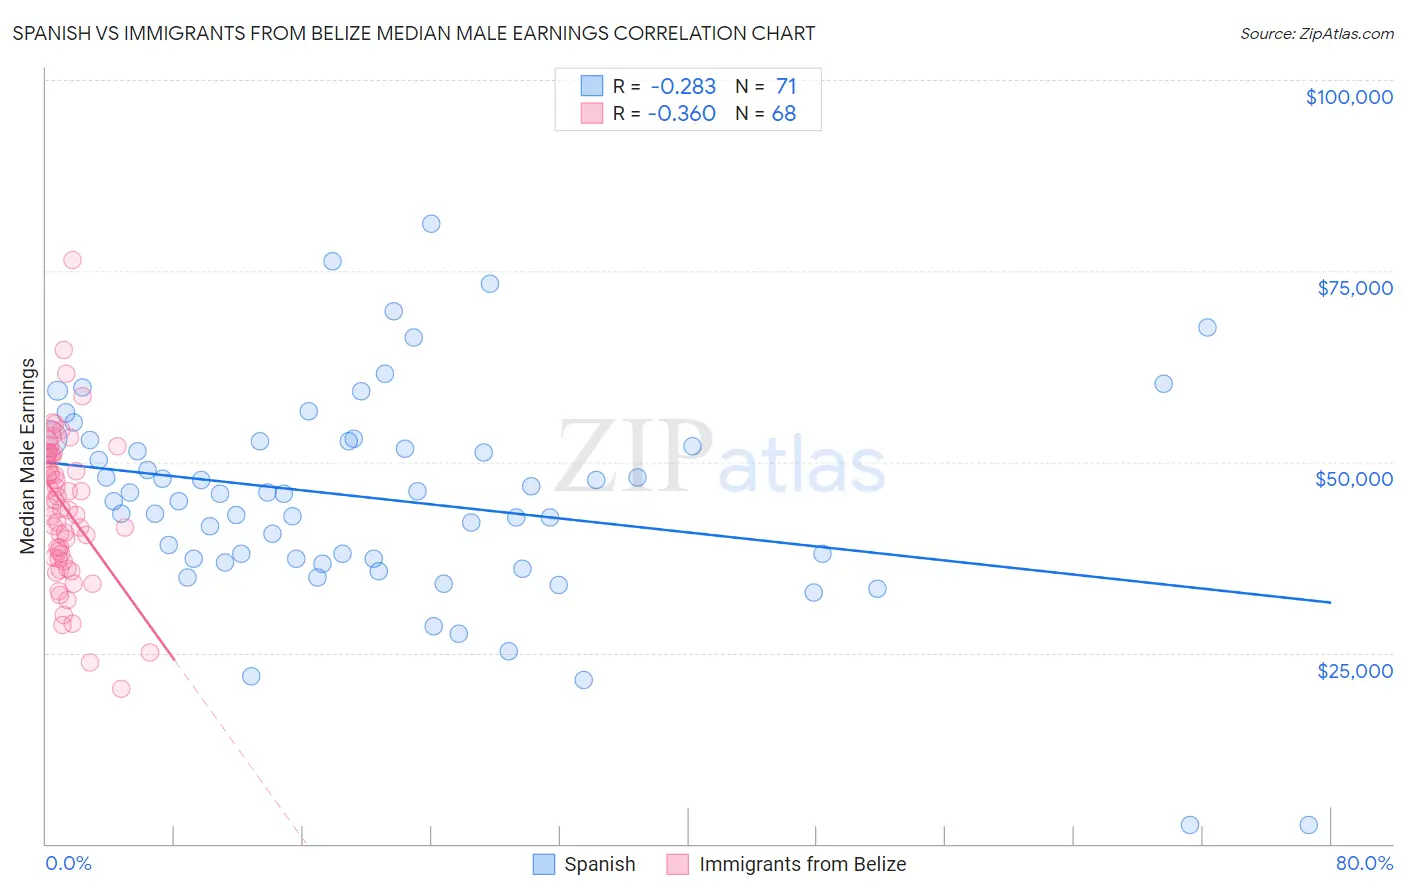 Spanish vs Immigrants from Belize Median Male Earnings